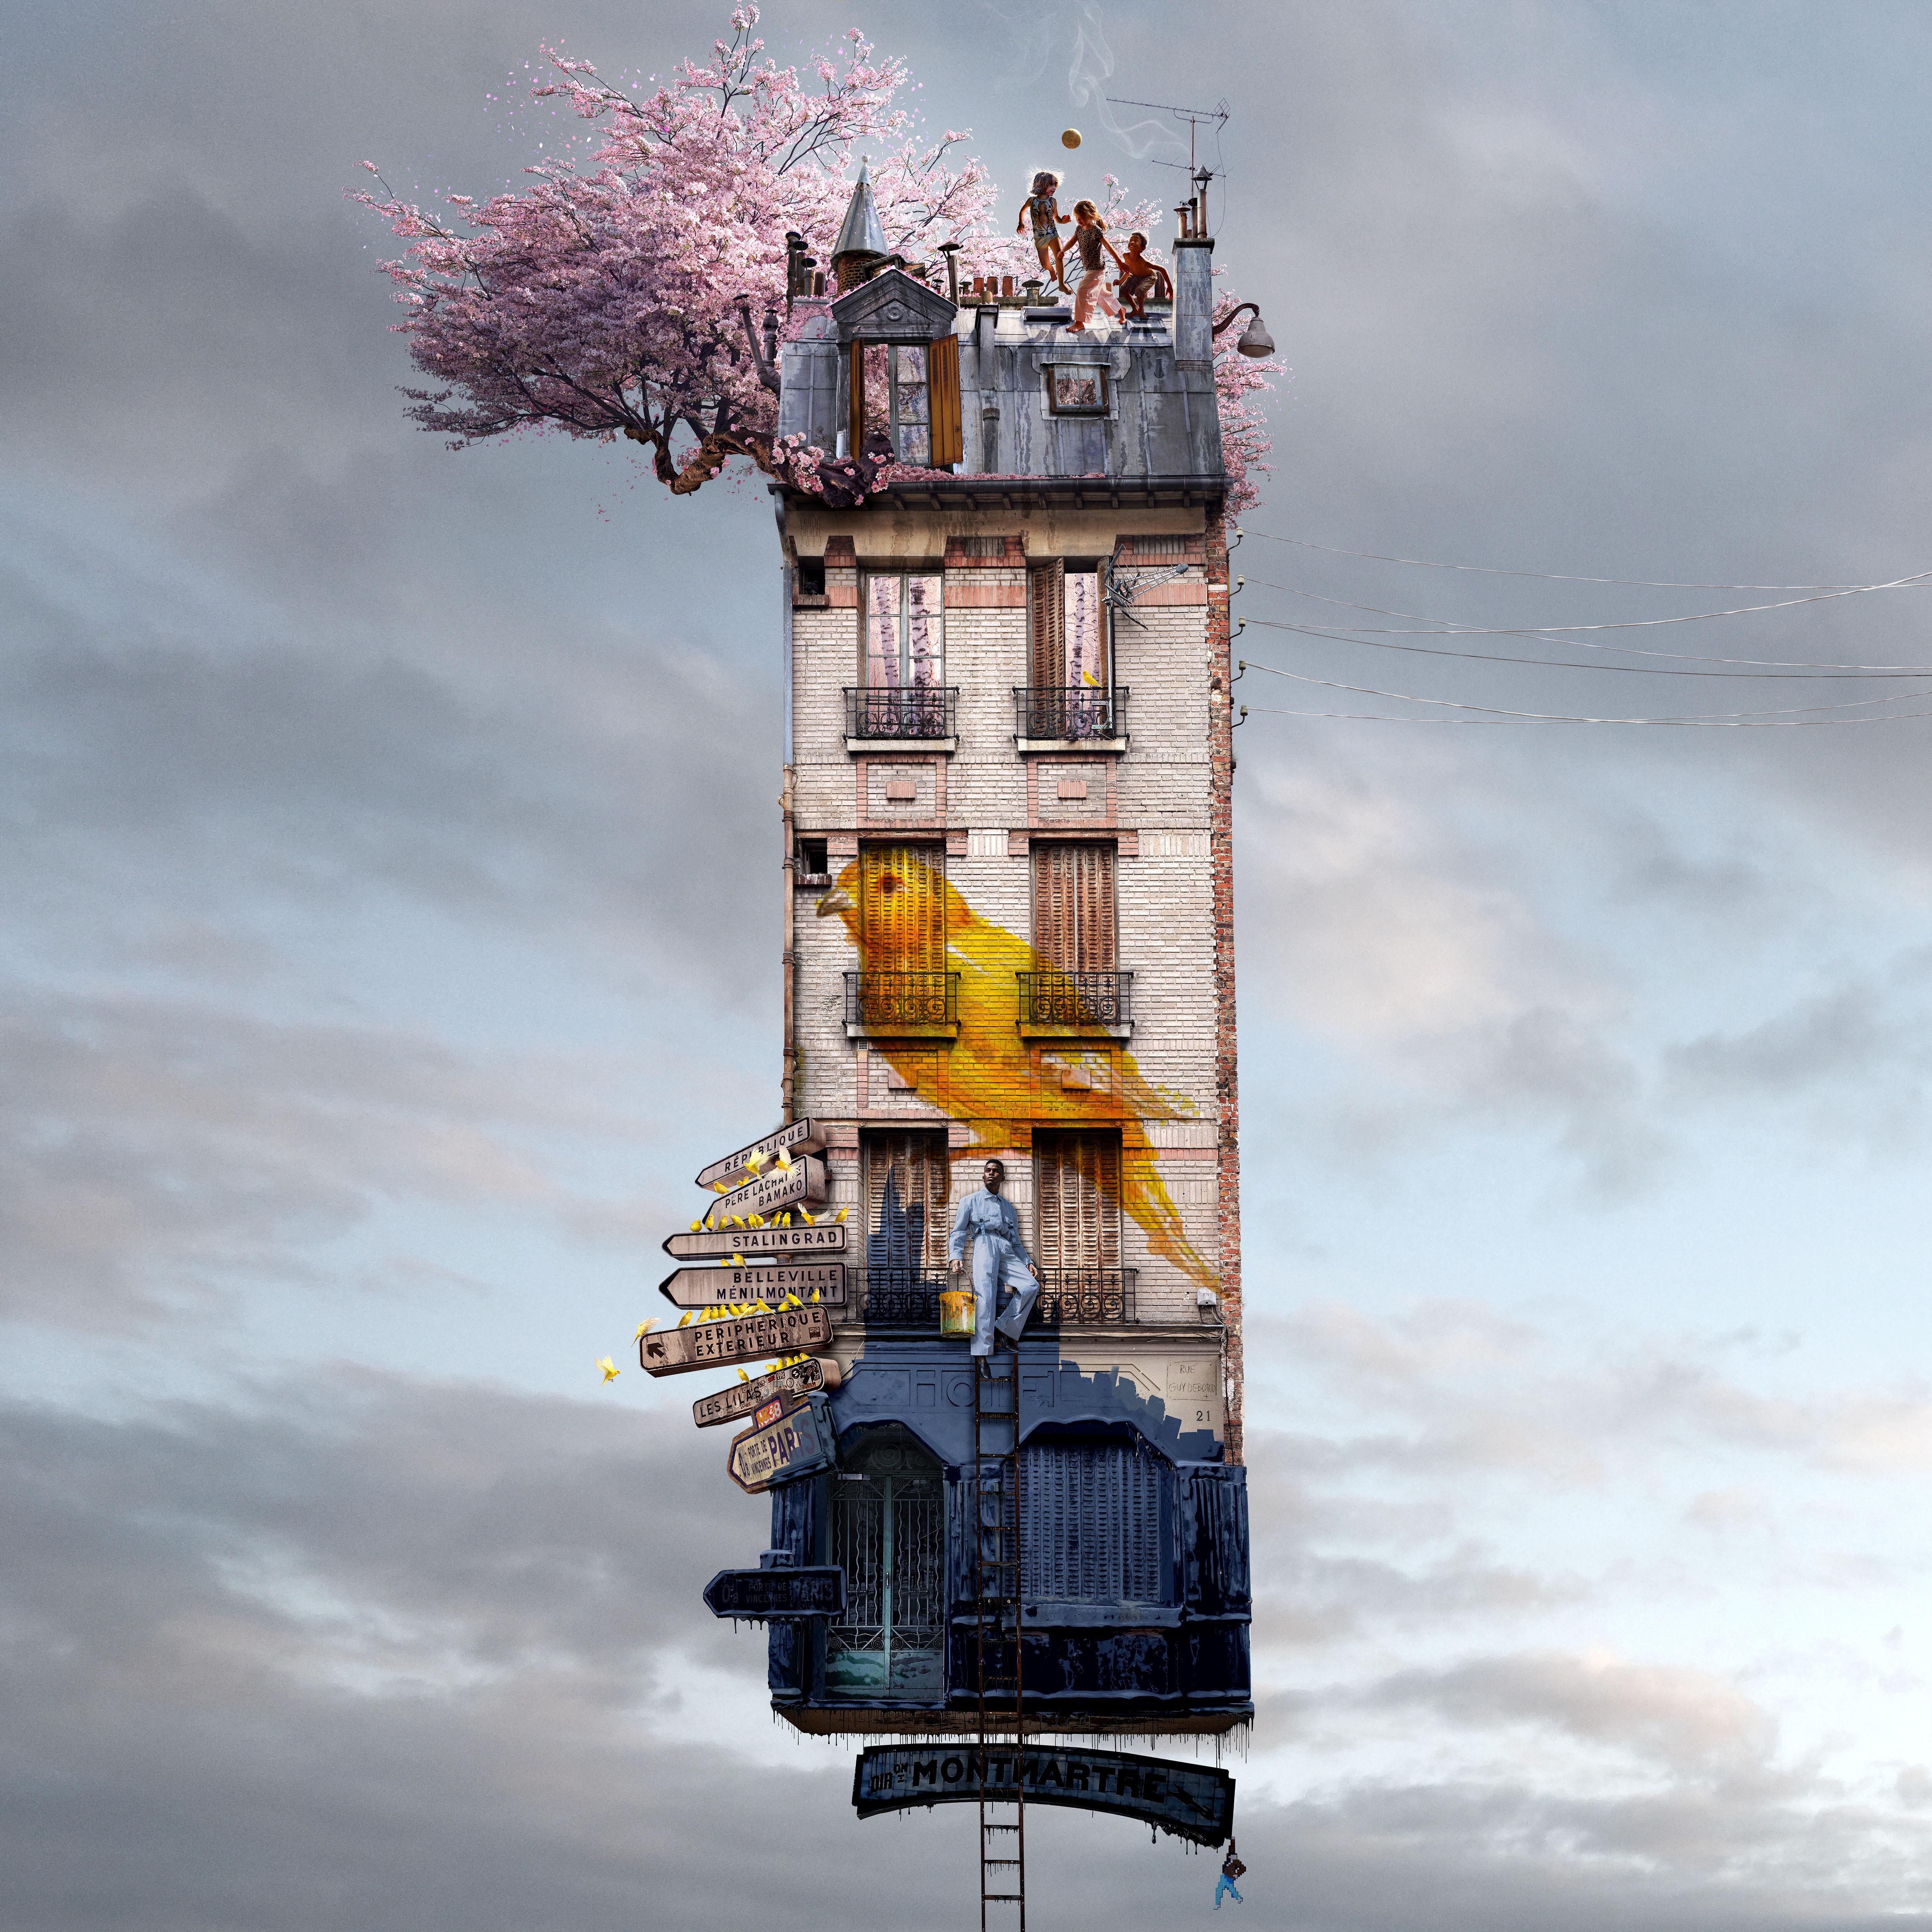 Laurent Chéhère Color Photograph - Three Samourais -  Digital contemporary color photograph of a Flying House